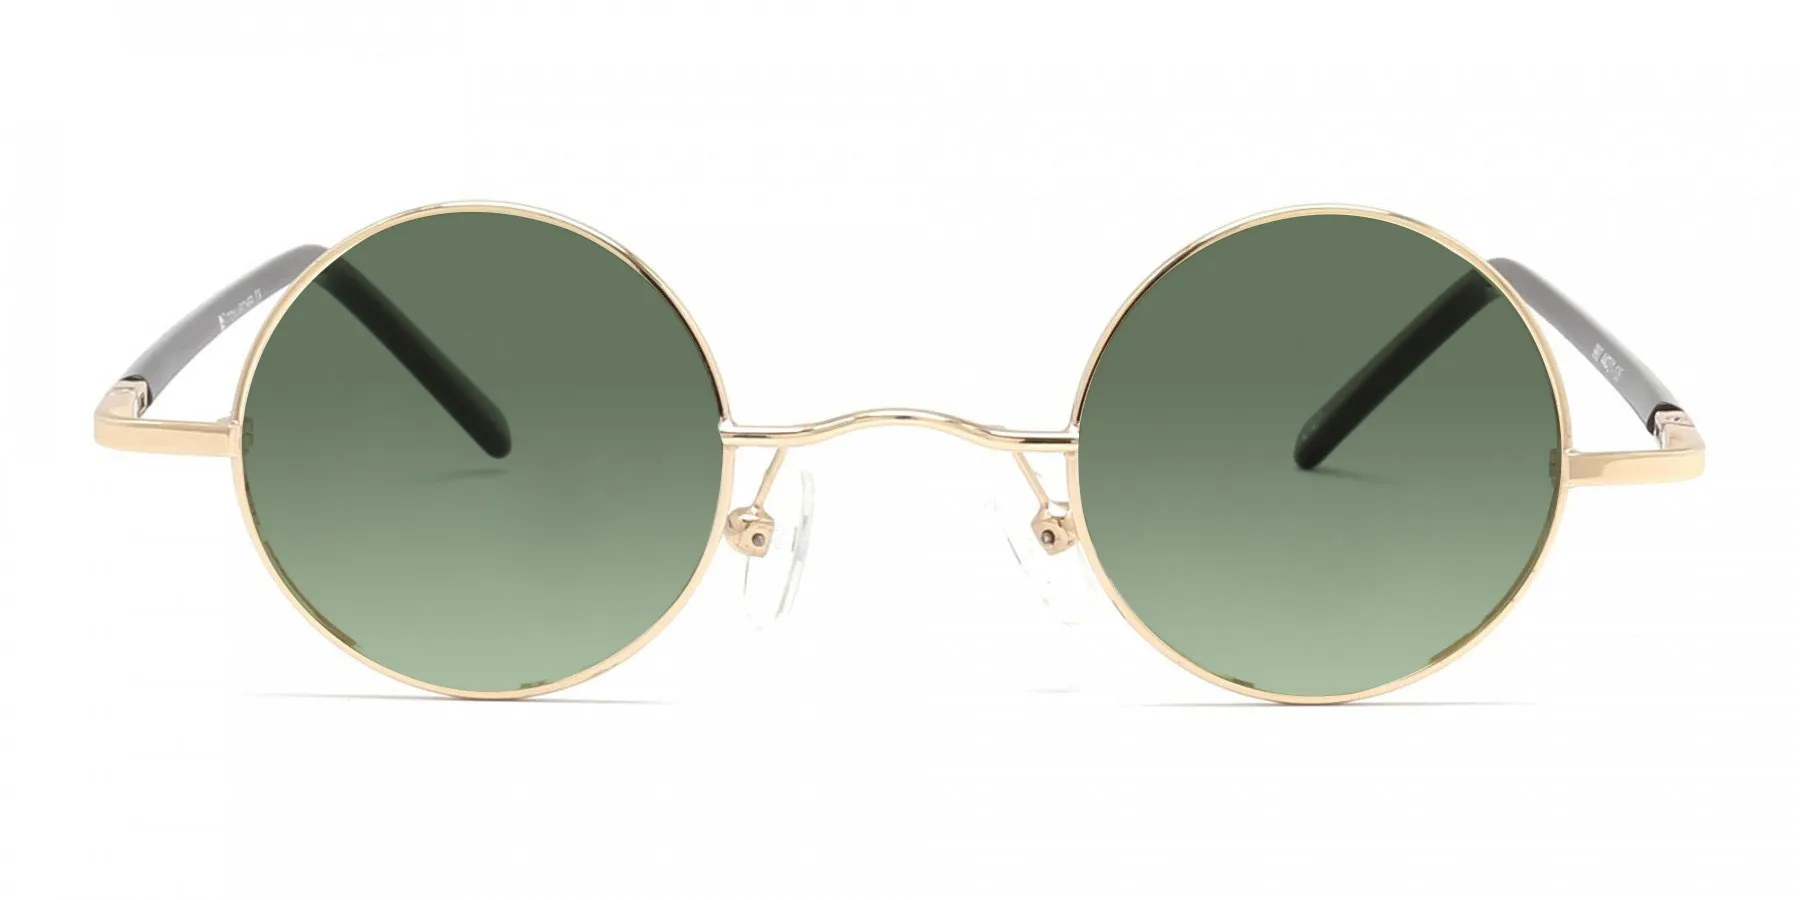 Men's Sunglasses Online at Best Price | Cool Sunnies for Men